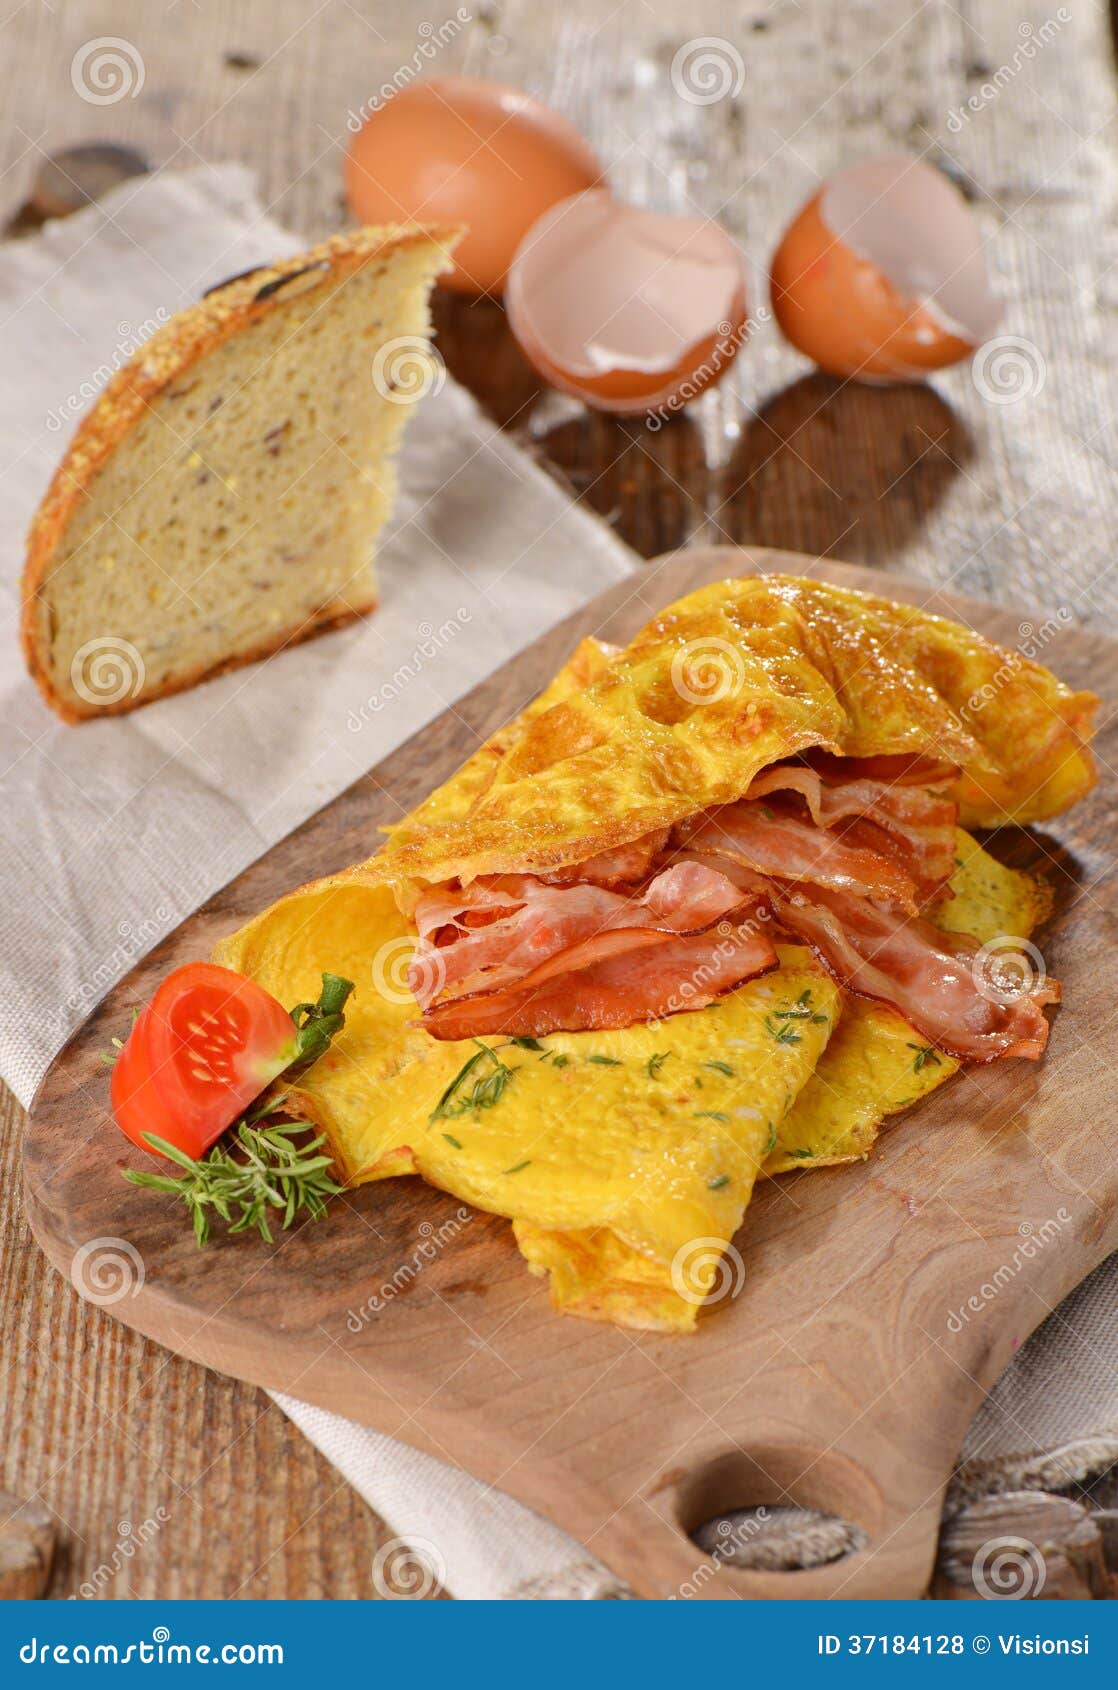 breakfast omelette with ham, bacon